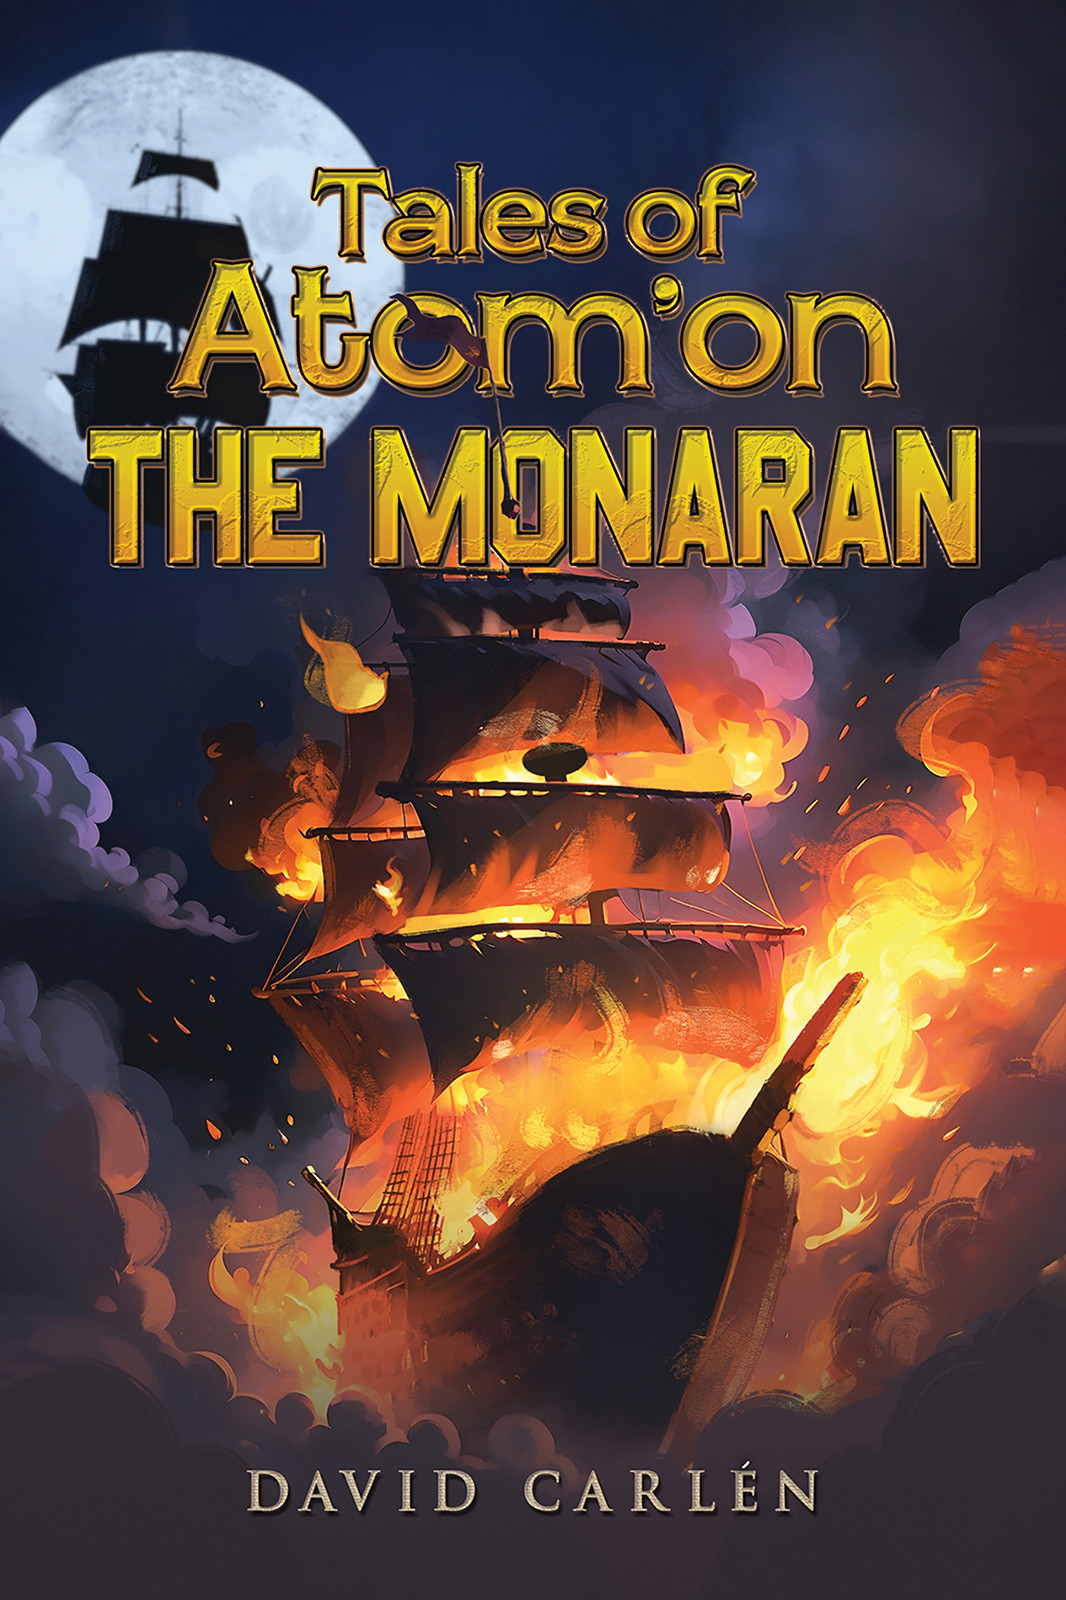 Tales of Atom’on: The Monaran